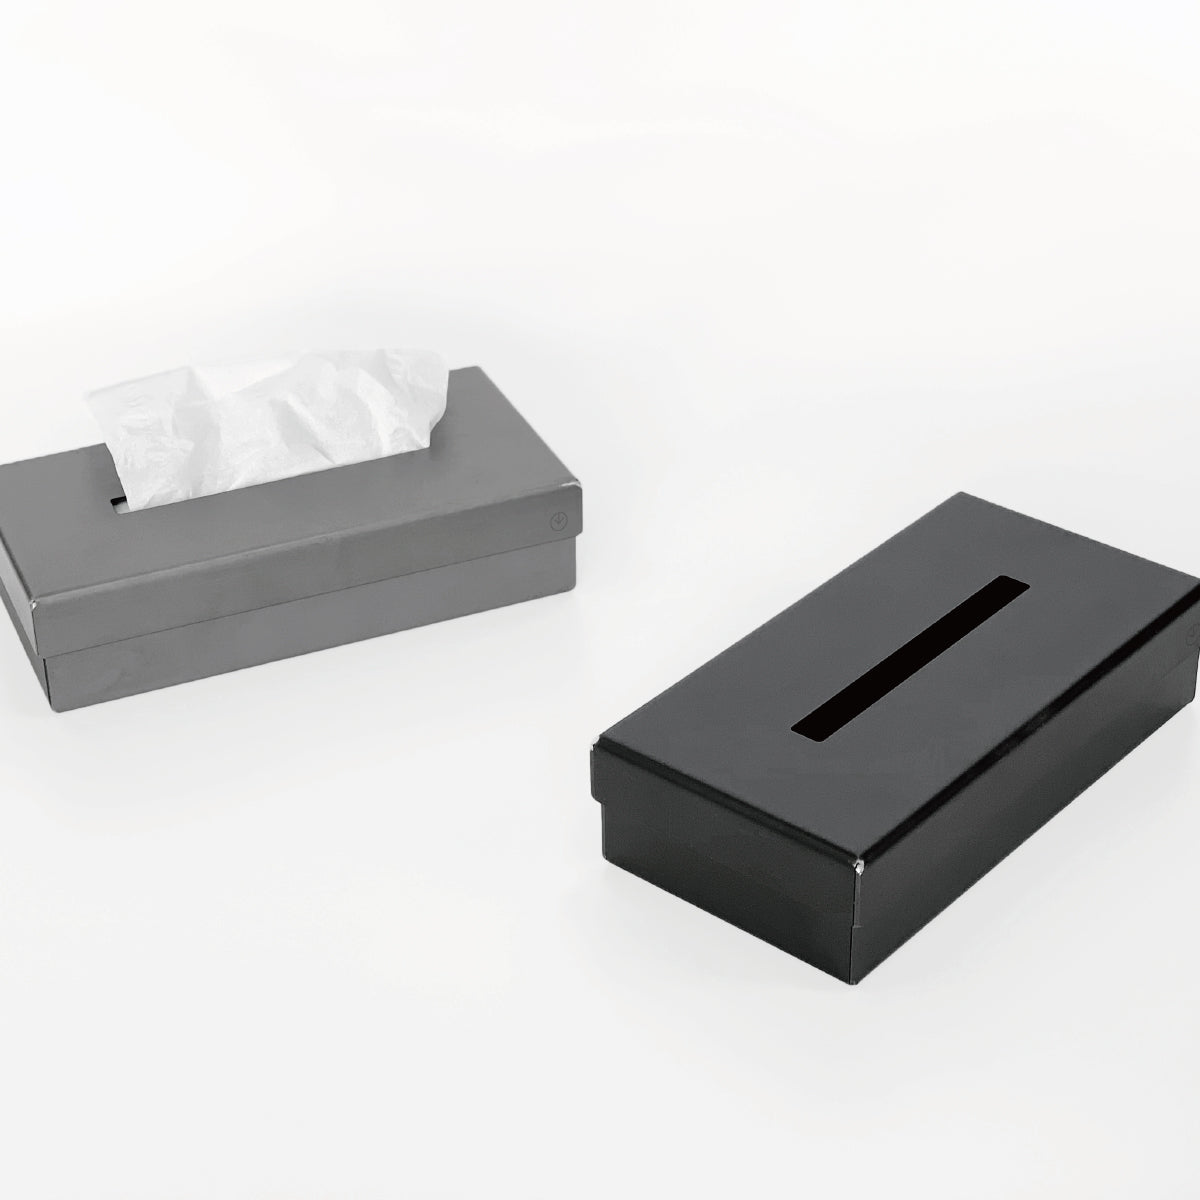 lid Box Tissue Case 黒皮鉄×黒皮鉄